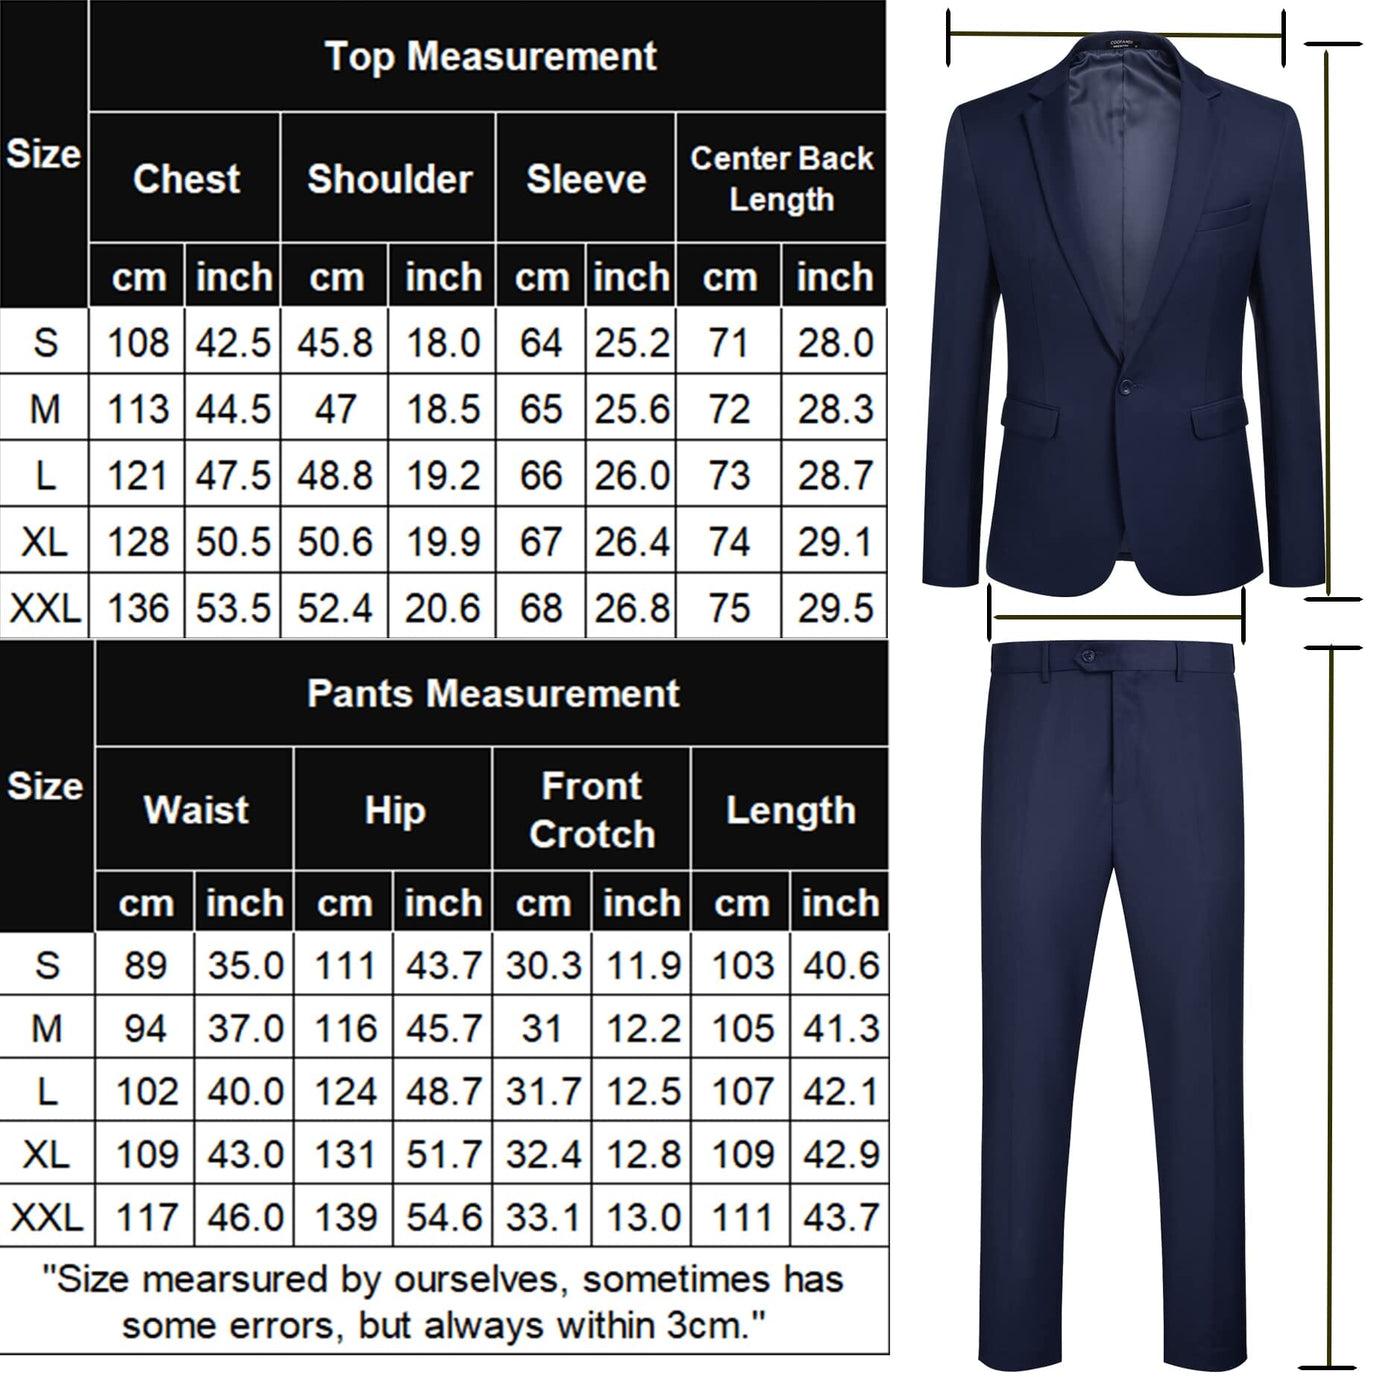 2 Piece Tuxedo Suit Set Blazer Jacket for Business (US Only) Suit Set coofandystore 